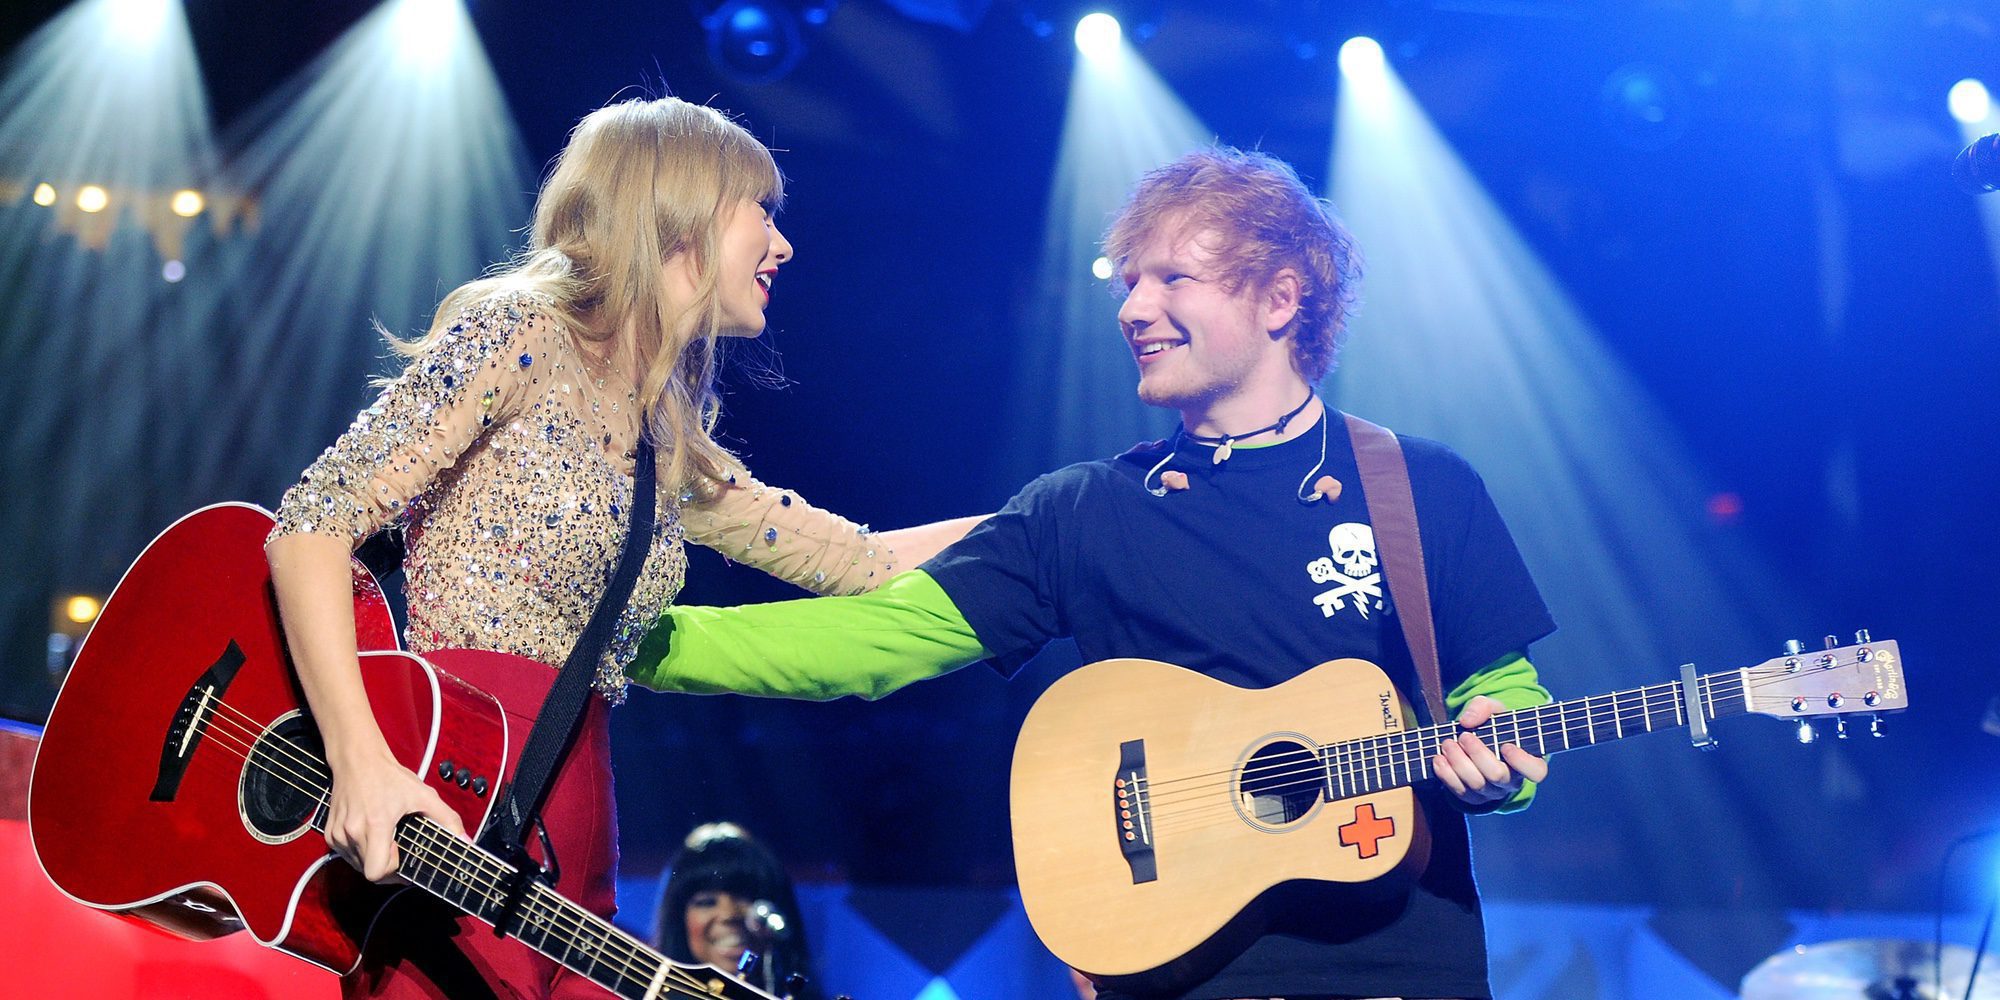 Ed Sheeran aclara que 'Dress' de Taylor Swift no habla sobre él